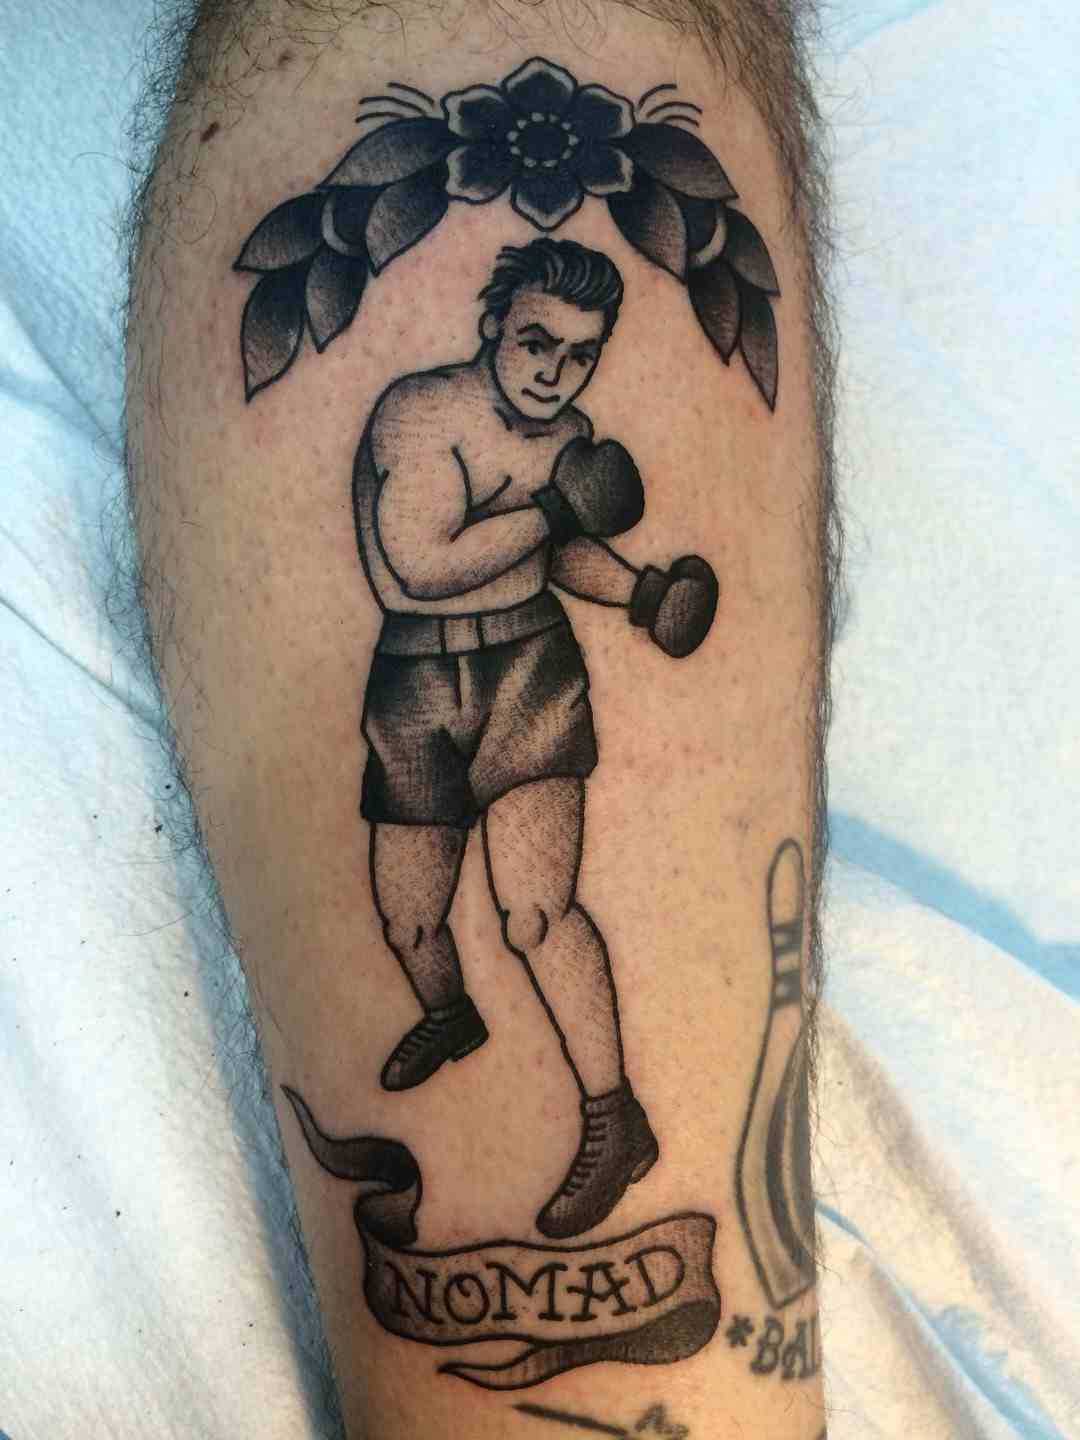 Nomad boxer tattoo